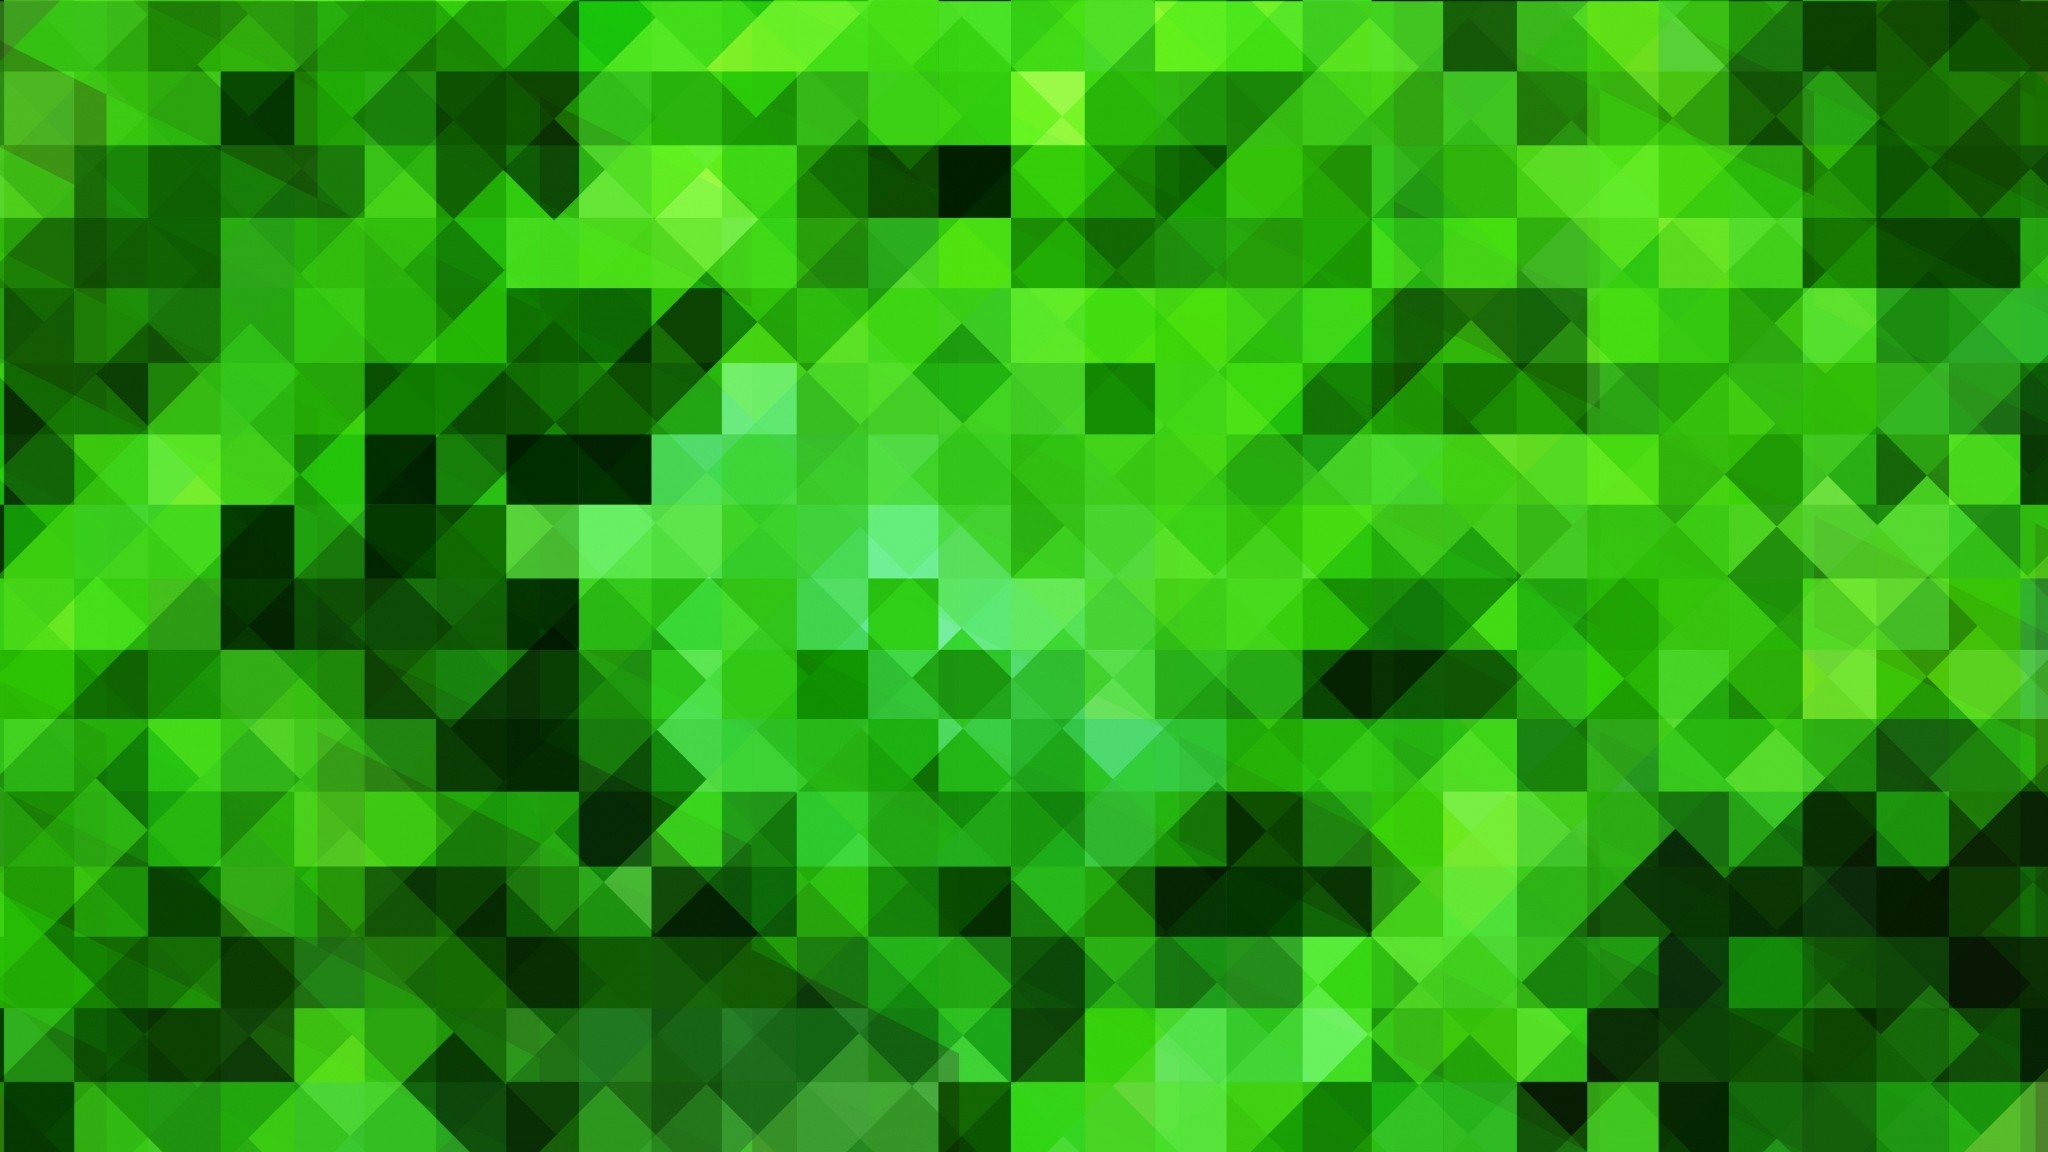 2048 by 1152 Pixels Wallpaper (71+ images)